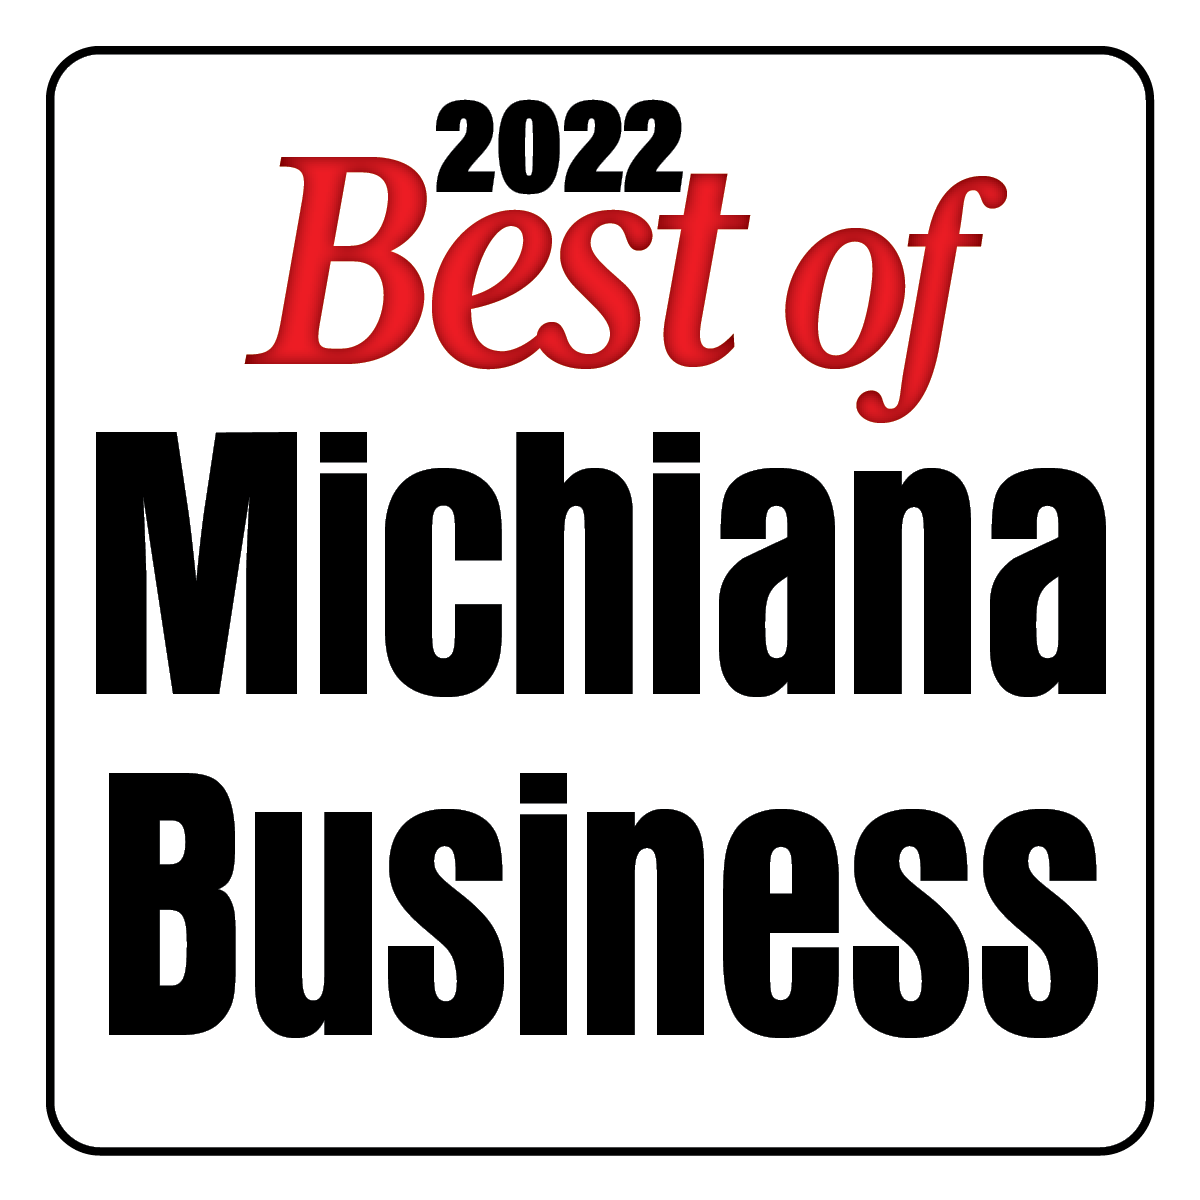 Best of Michiana Business 2022